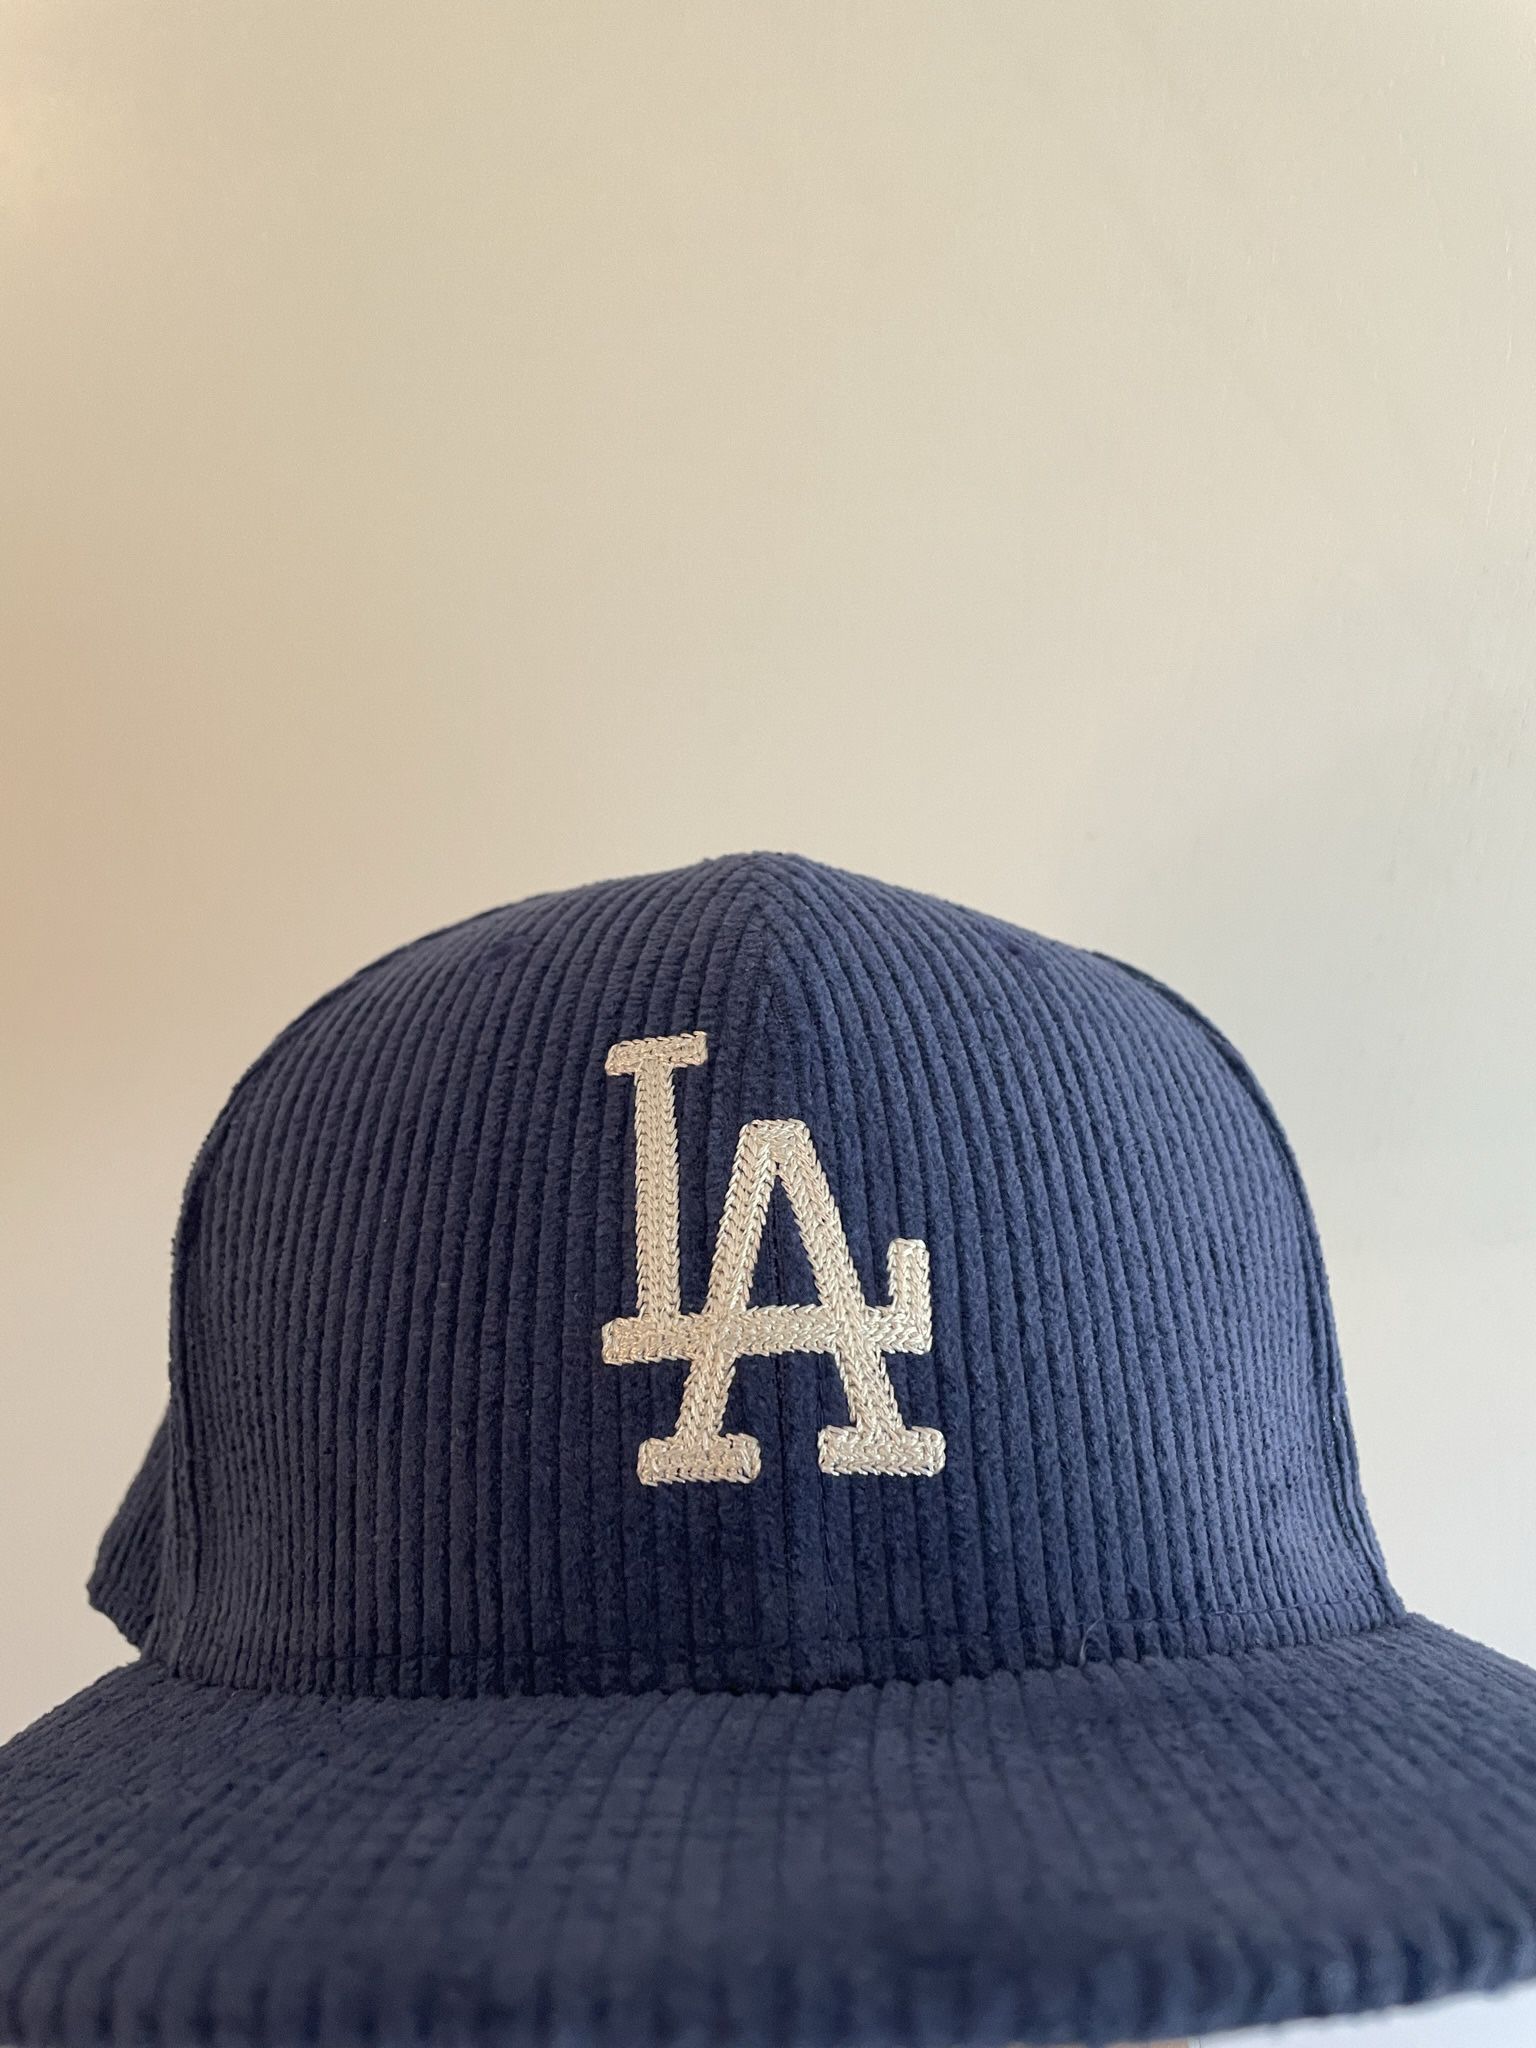 Los Angeles Dodgers New Era Hat 7 3/8